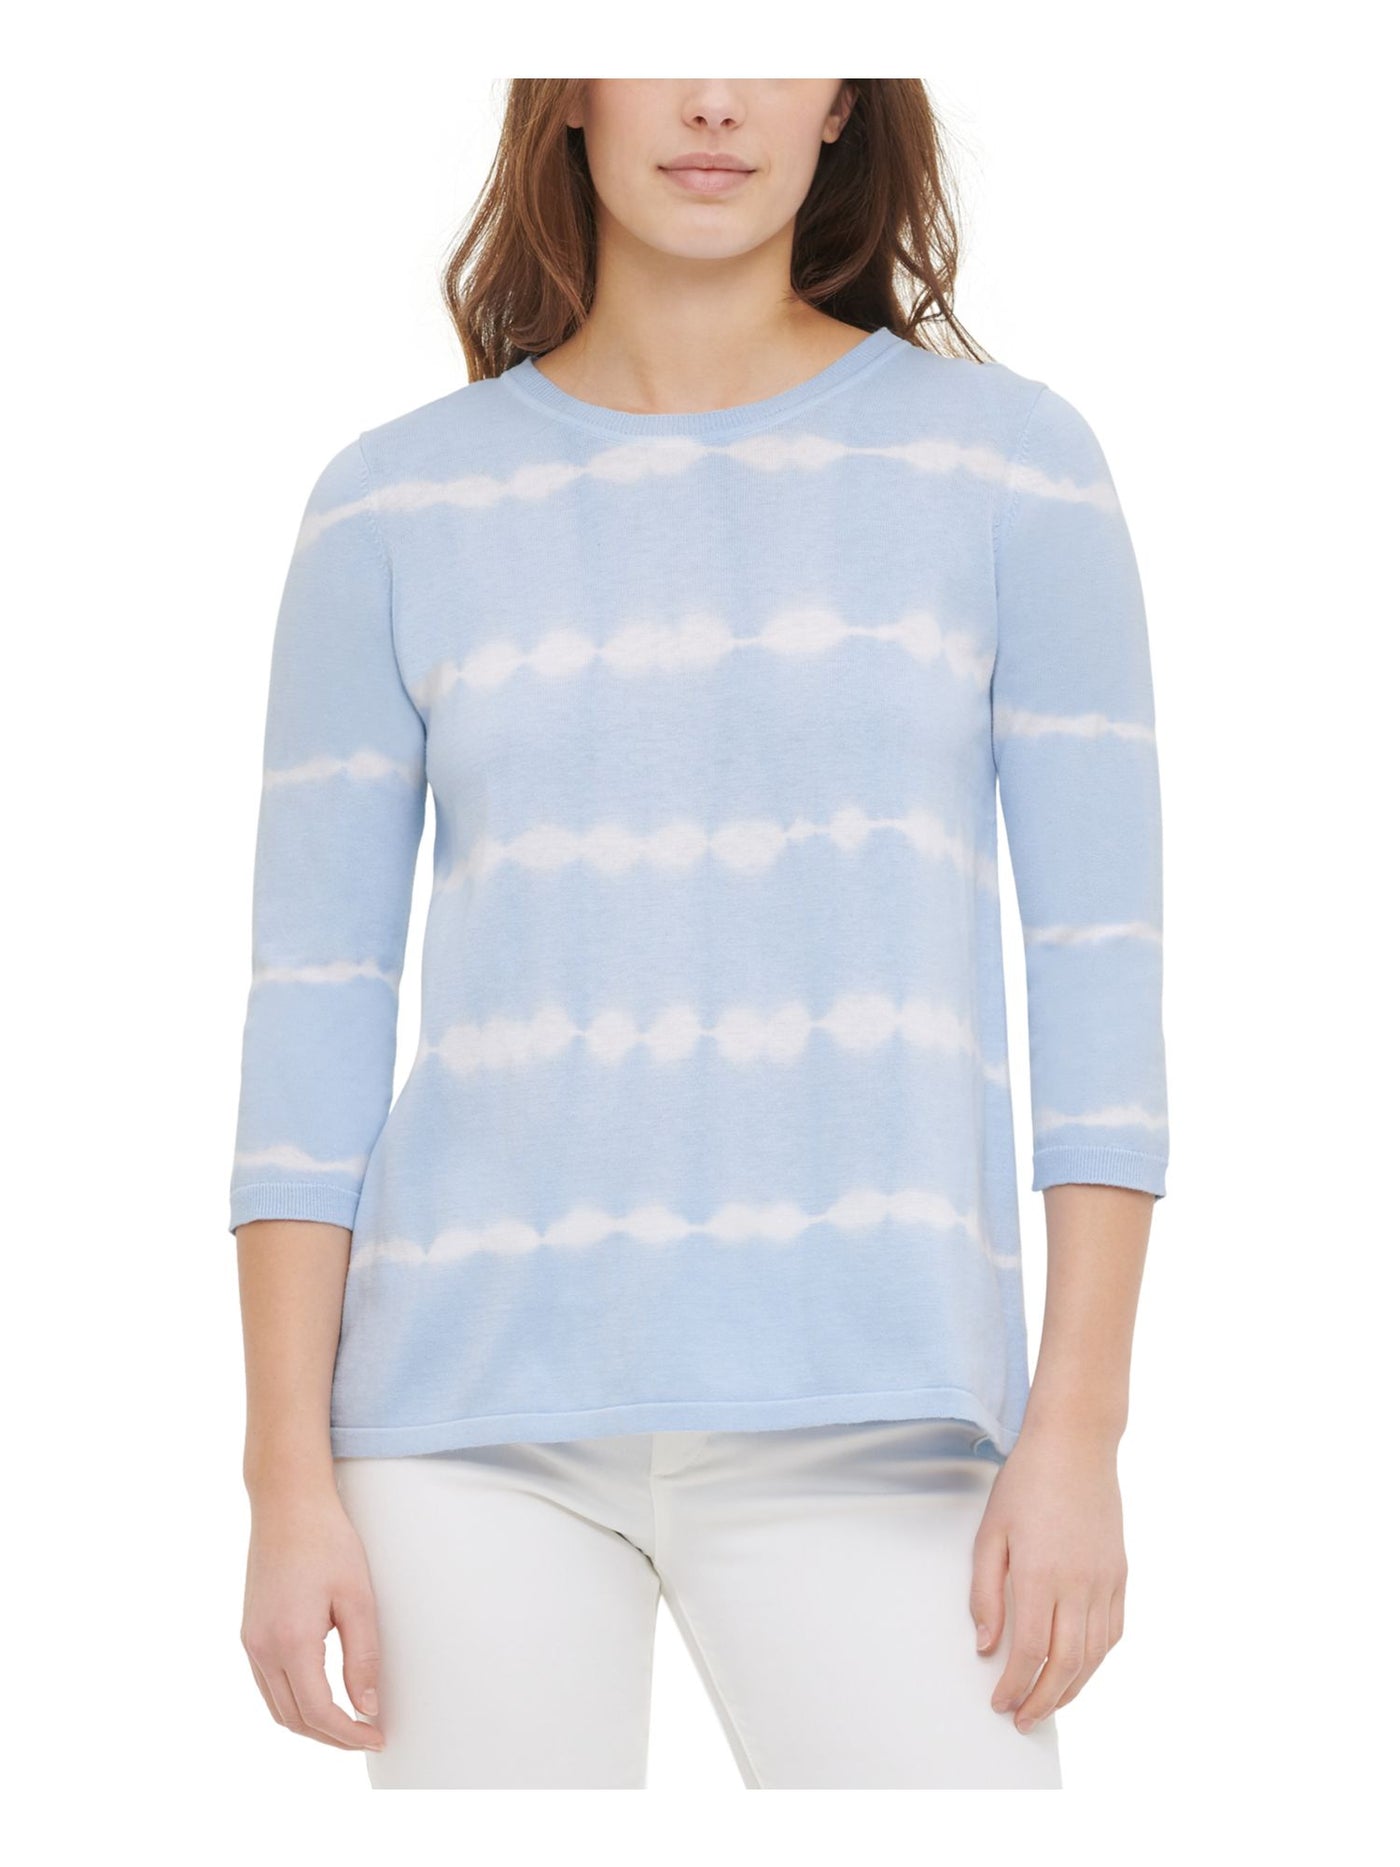 CALVIN KLEIN Womens 3/4 Sleeve Jewel Neck Sweater